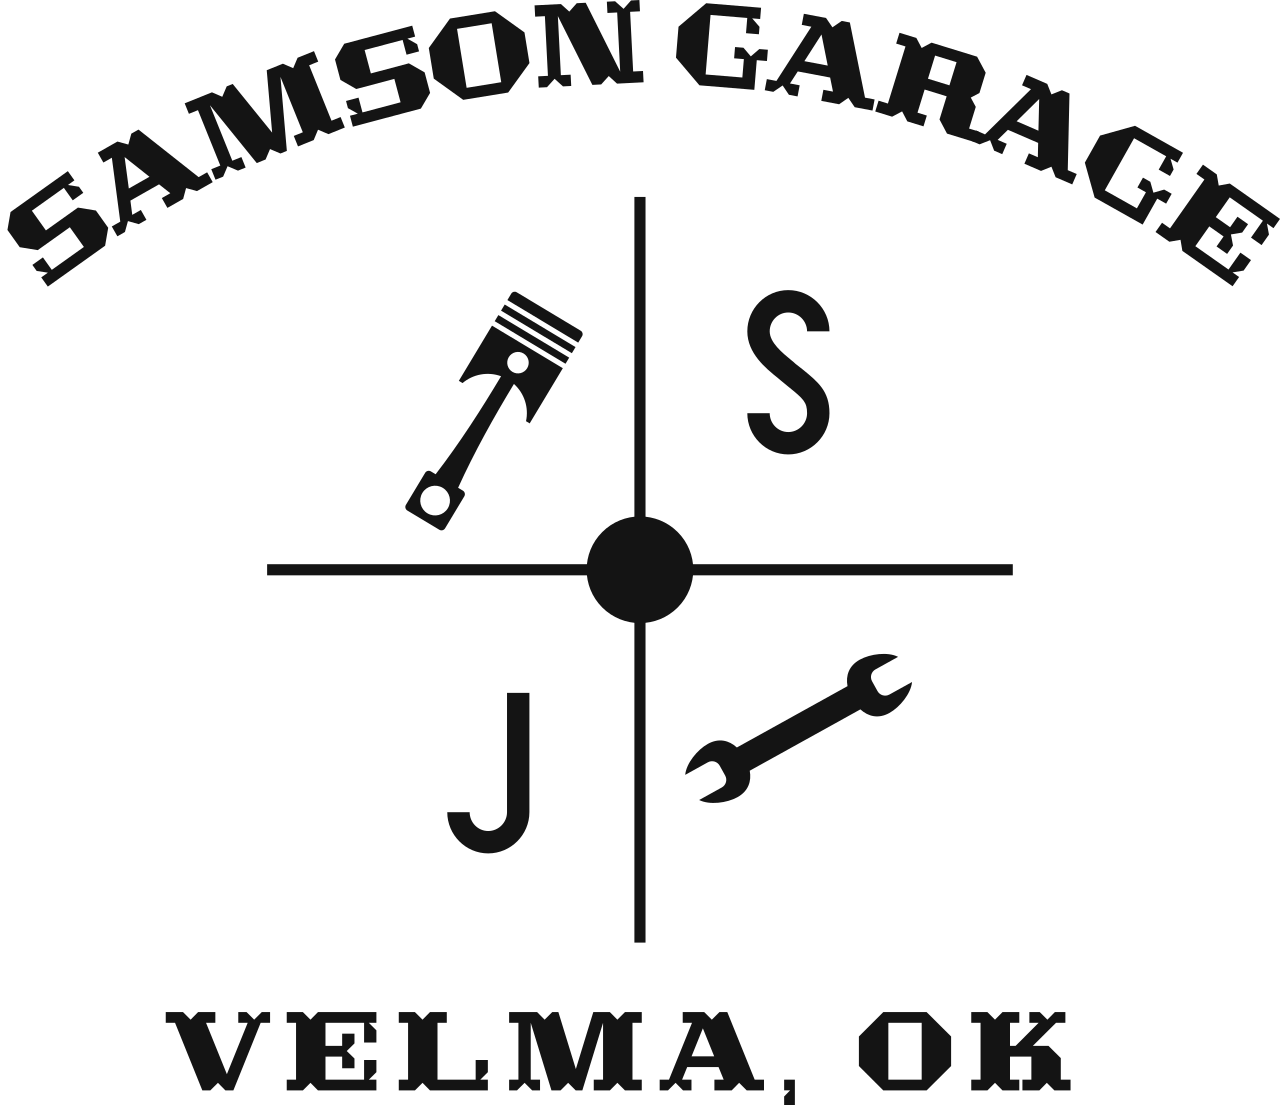 samson garage's logo